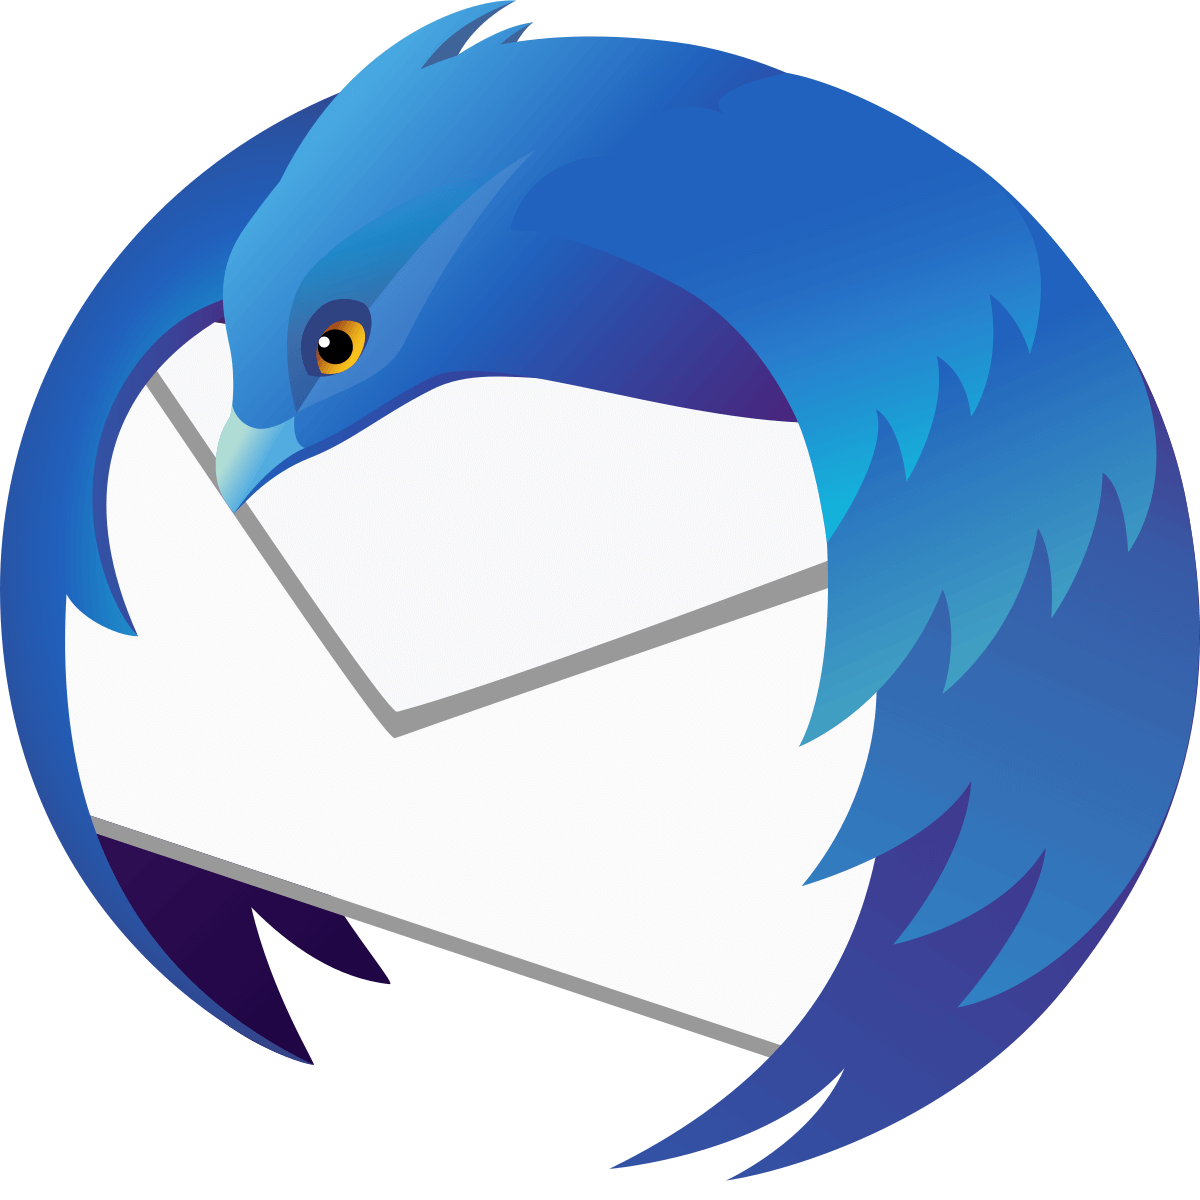 thunderbird email recovery tool